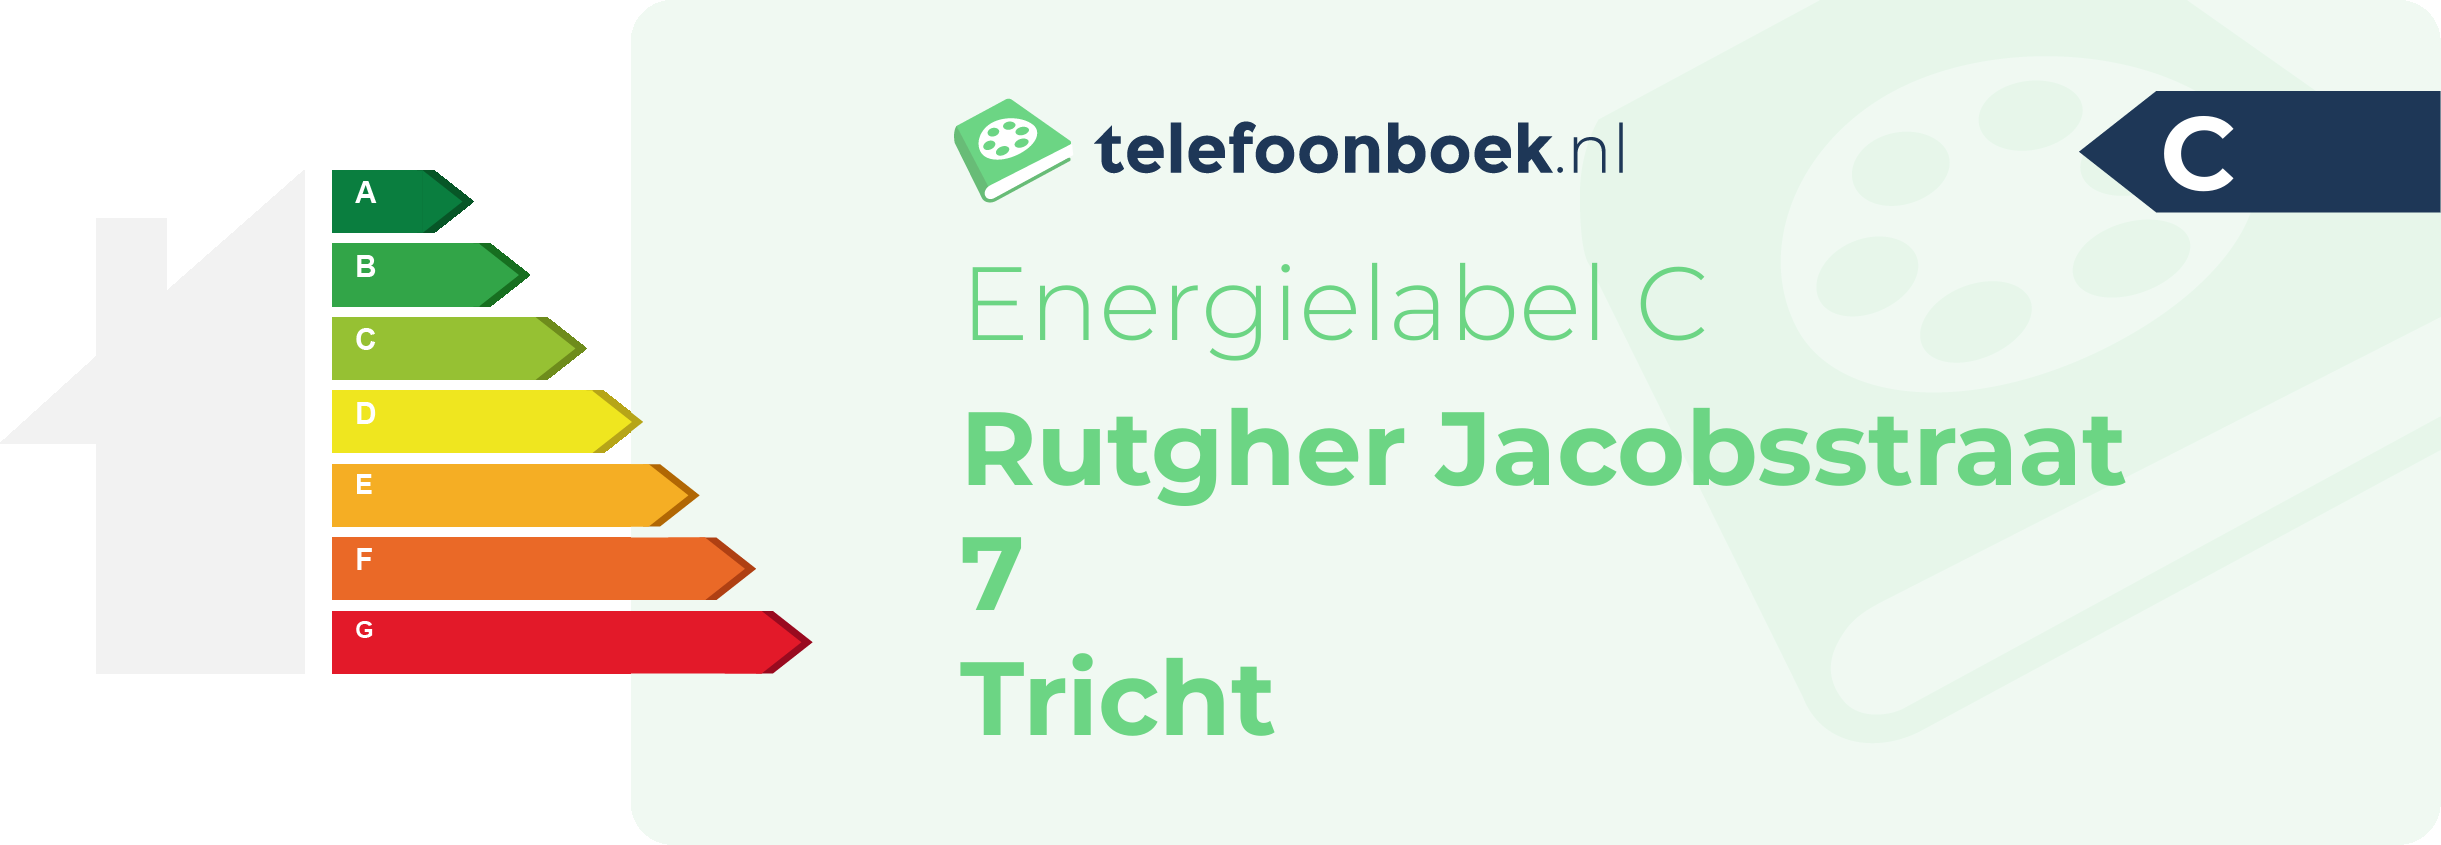 Energielabel Rutgher Jacobsstraat 7 Tricht